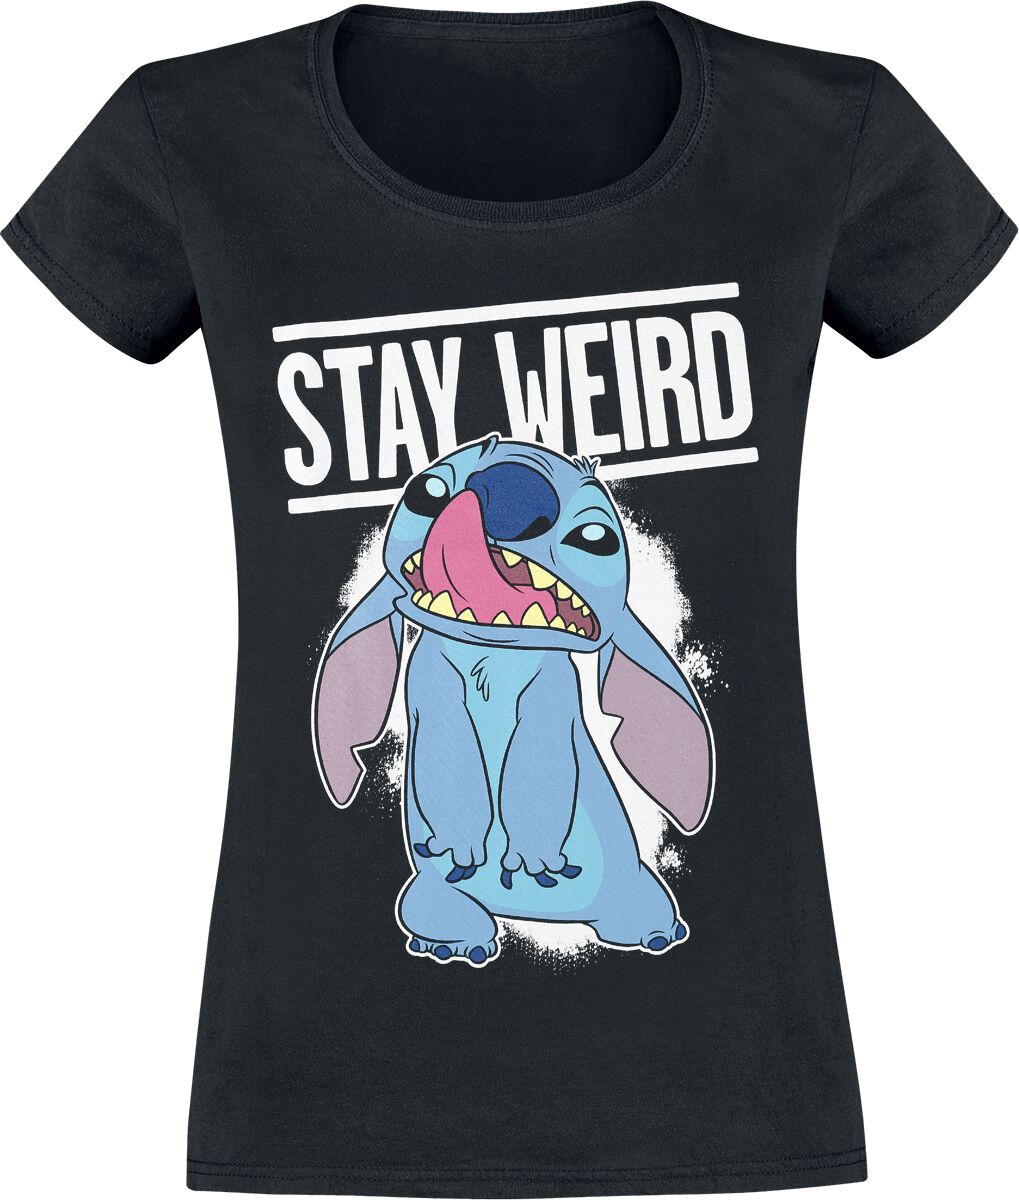 Lilo & Stitch Stay Weird T-Shirt schwarz in XL